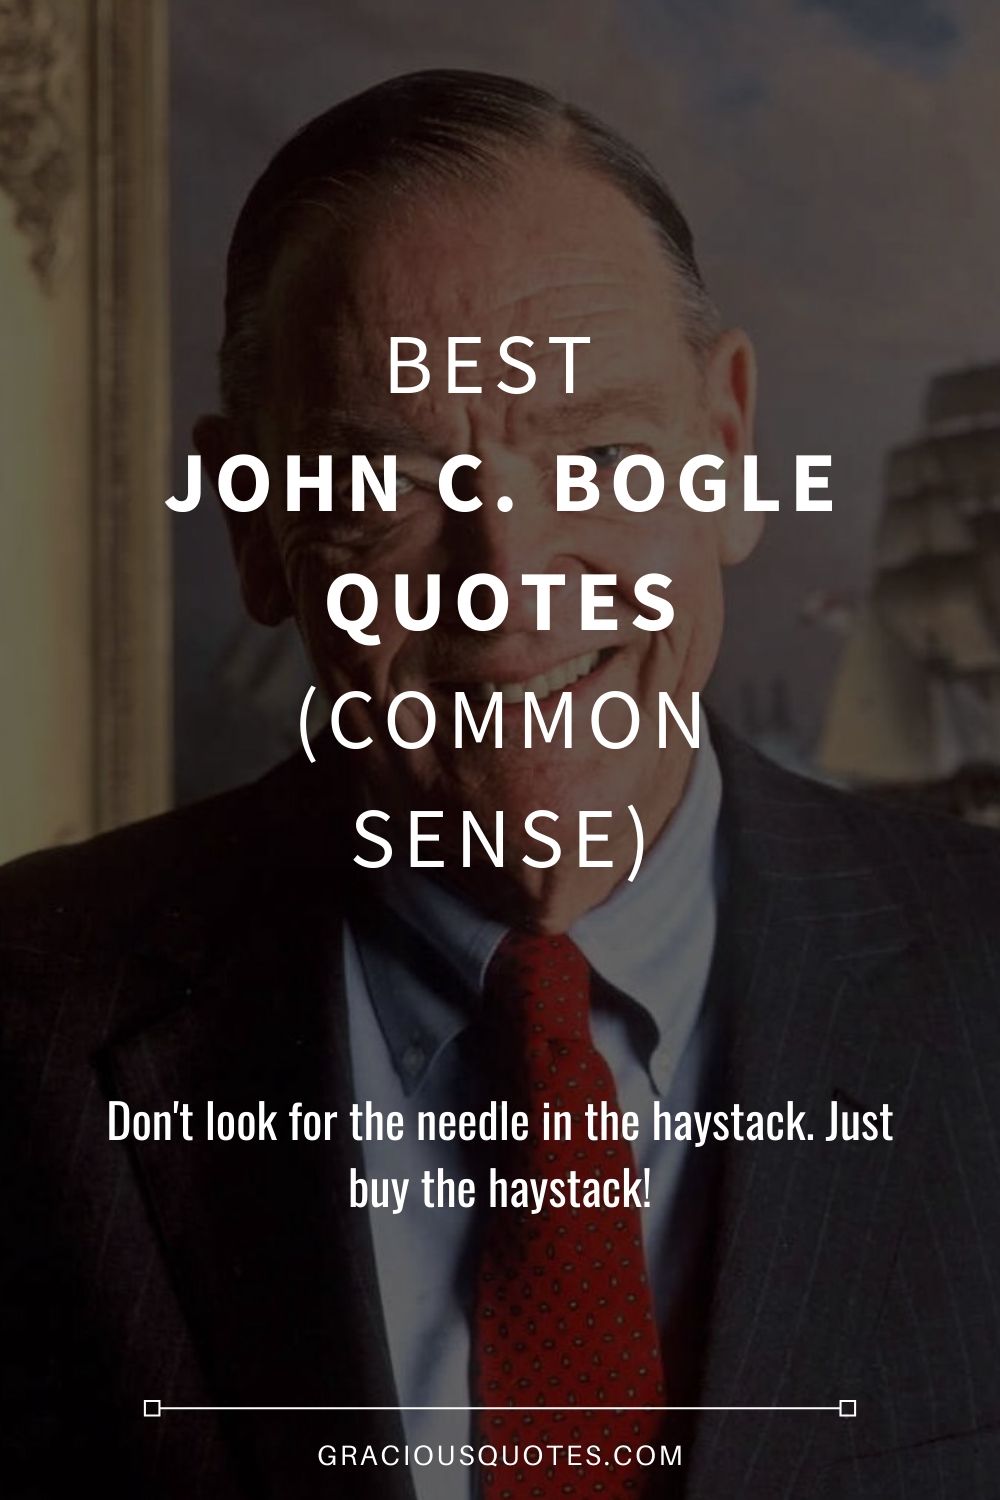 Best John C. Bogle Quotes (COMMON SENSE) - Gracious Quotes